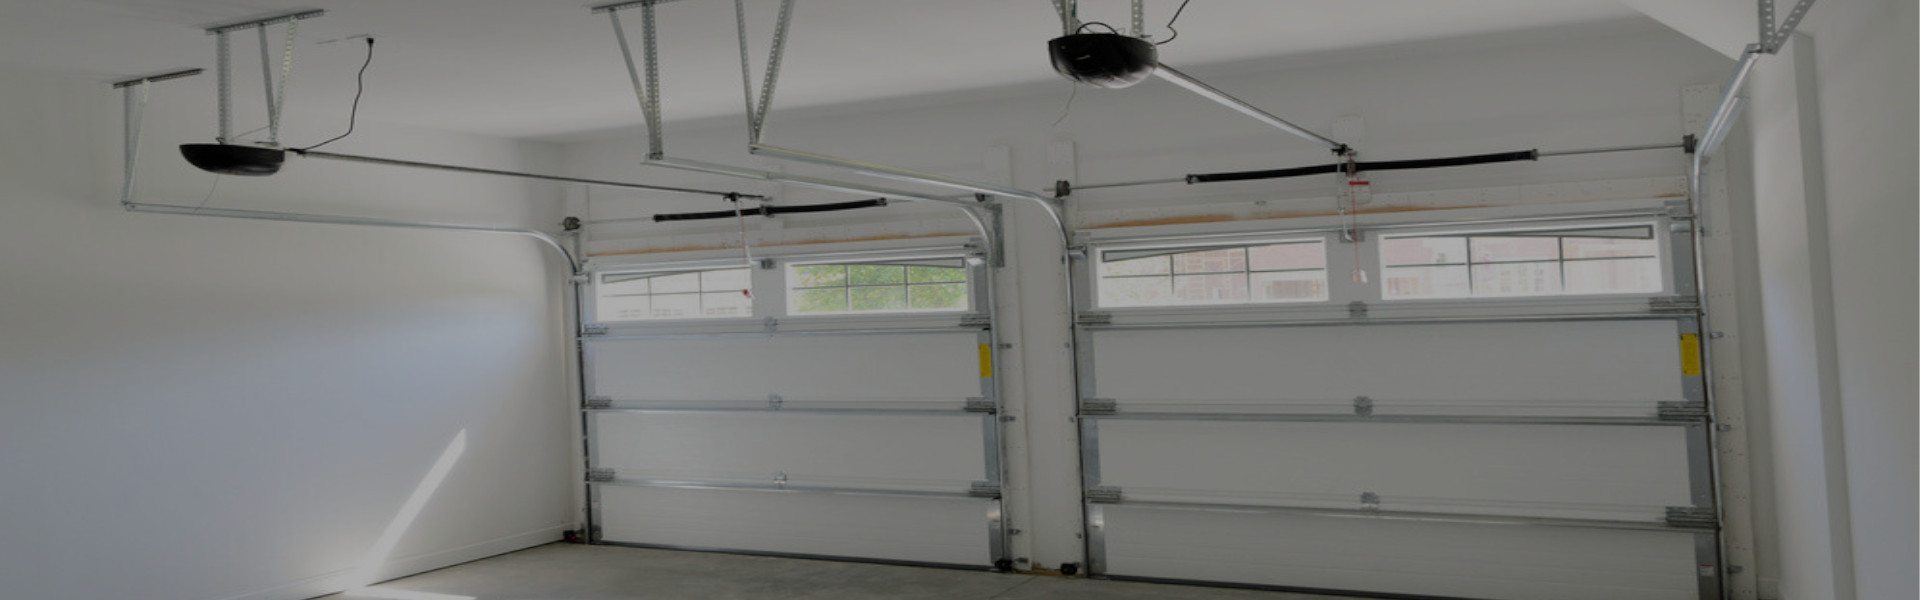 Slider Garage Door Repair, Glaziers in Bexleyheath, Upton, DA6